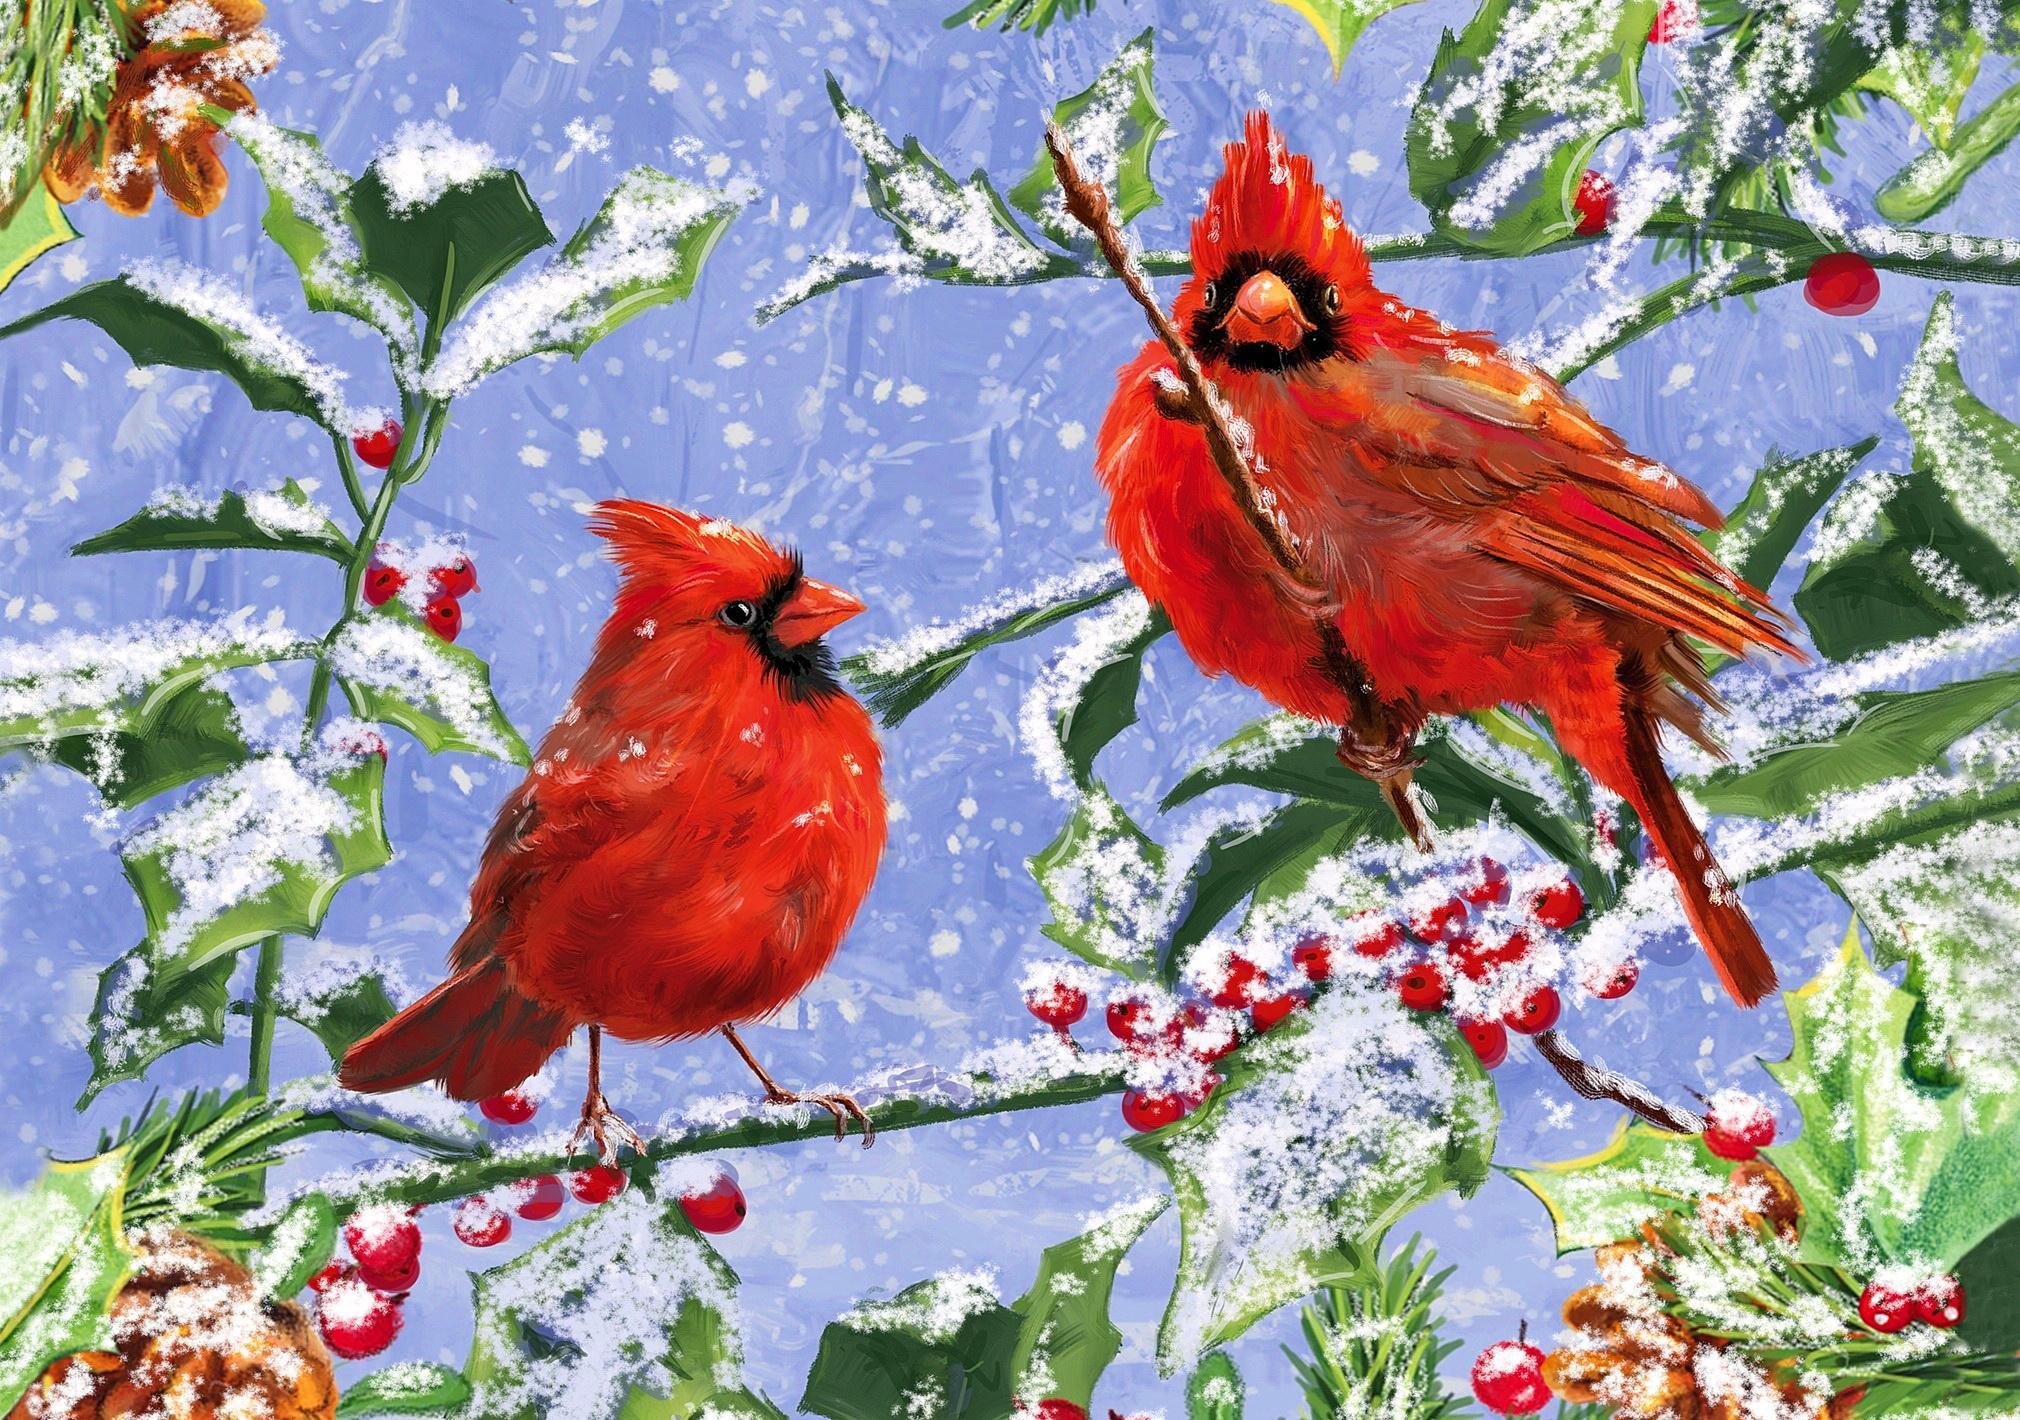 Download 2020x1420 Cardinal winter wallpaper